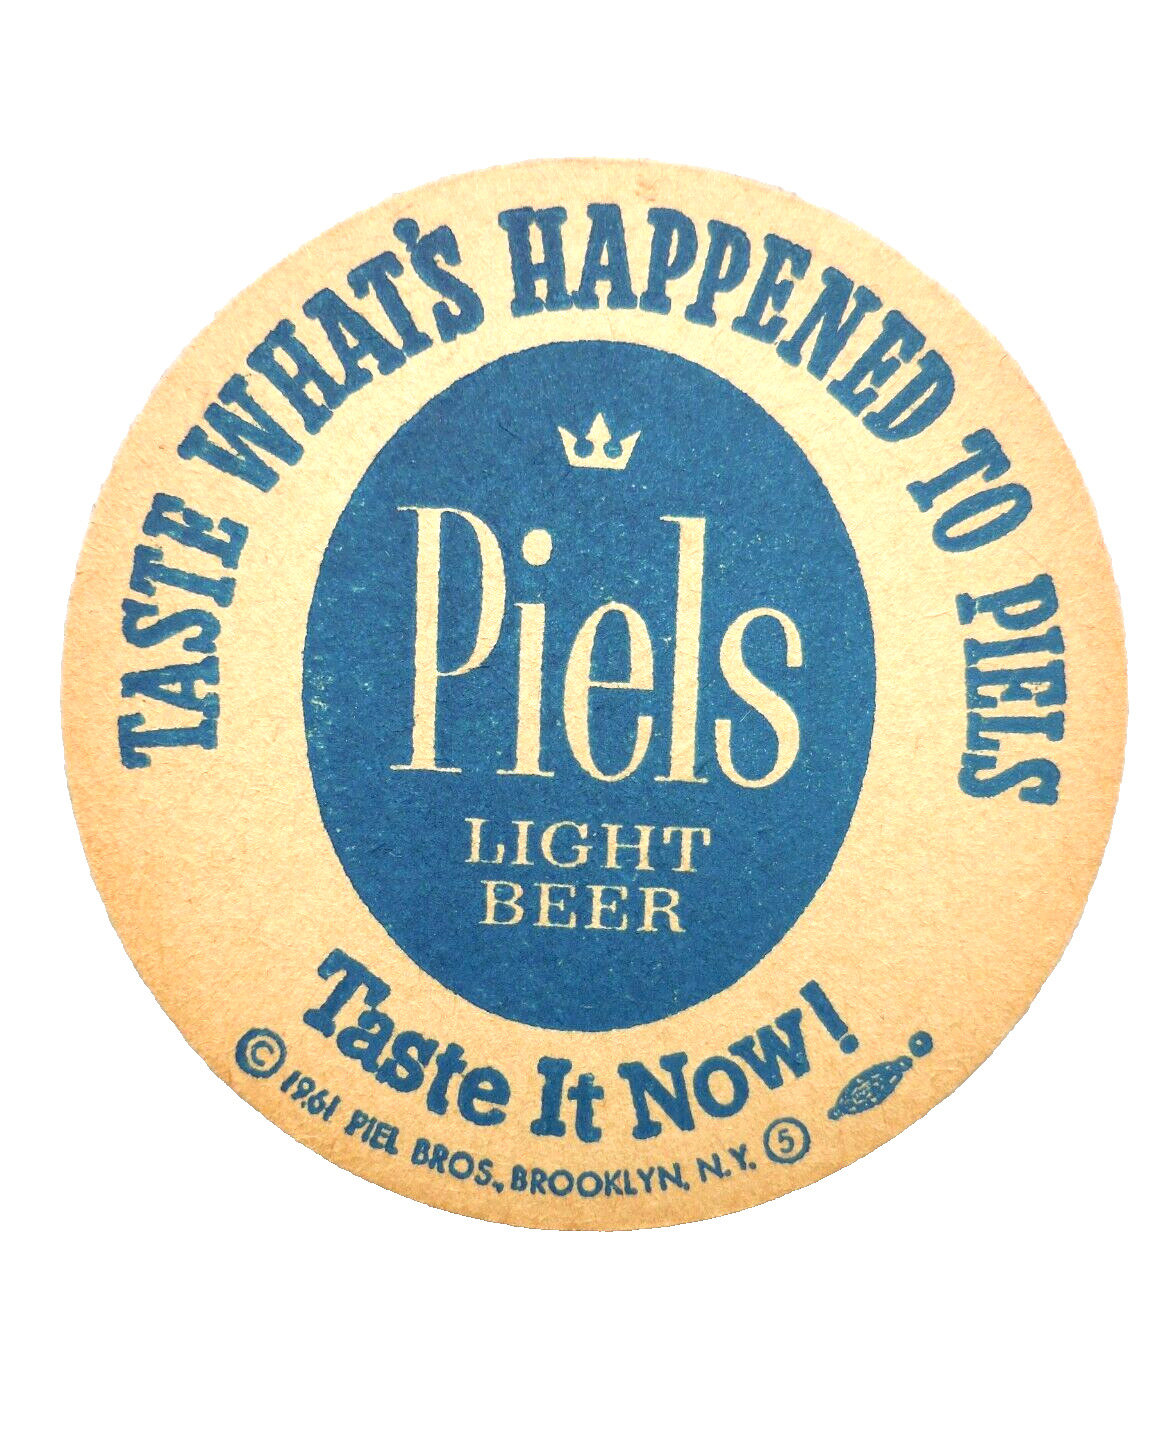 Piel\'s vintage Coasters, set of 6, Taste What Happened to Piels, dated 1961